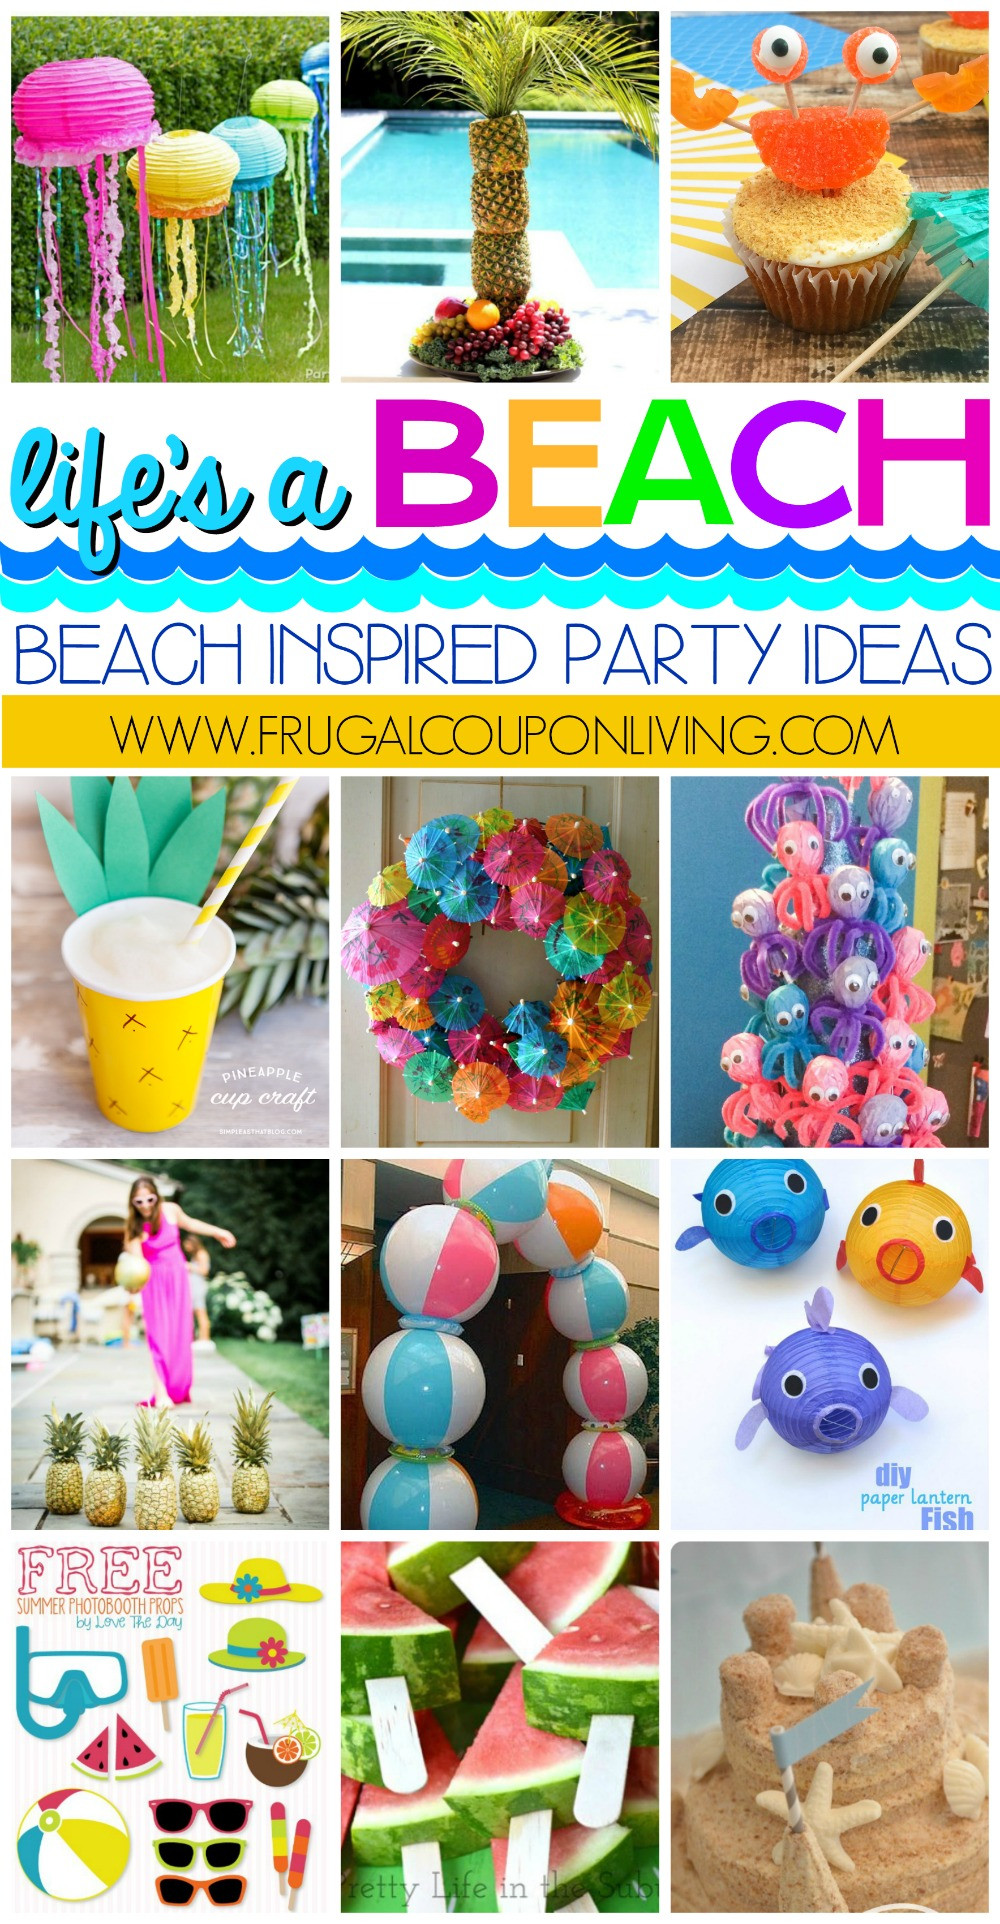 Beach Birthday Party Ideas Pinterest
 Beach Inspired Party Ideas